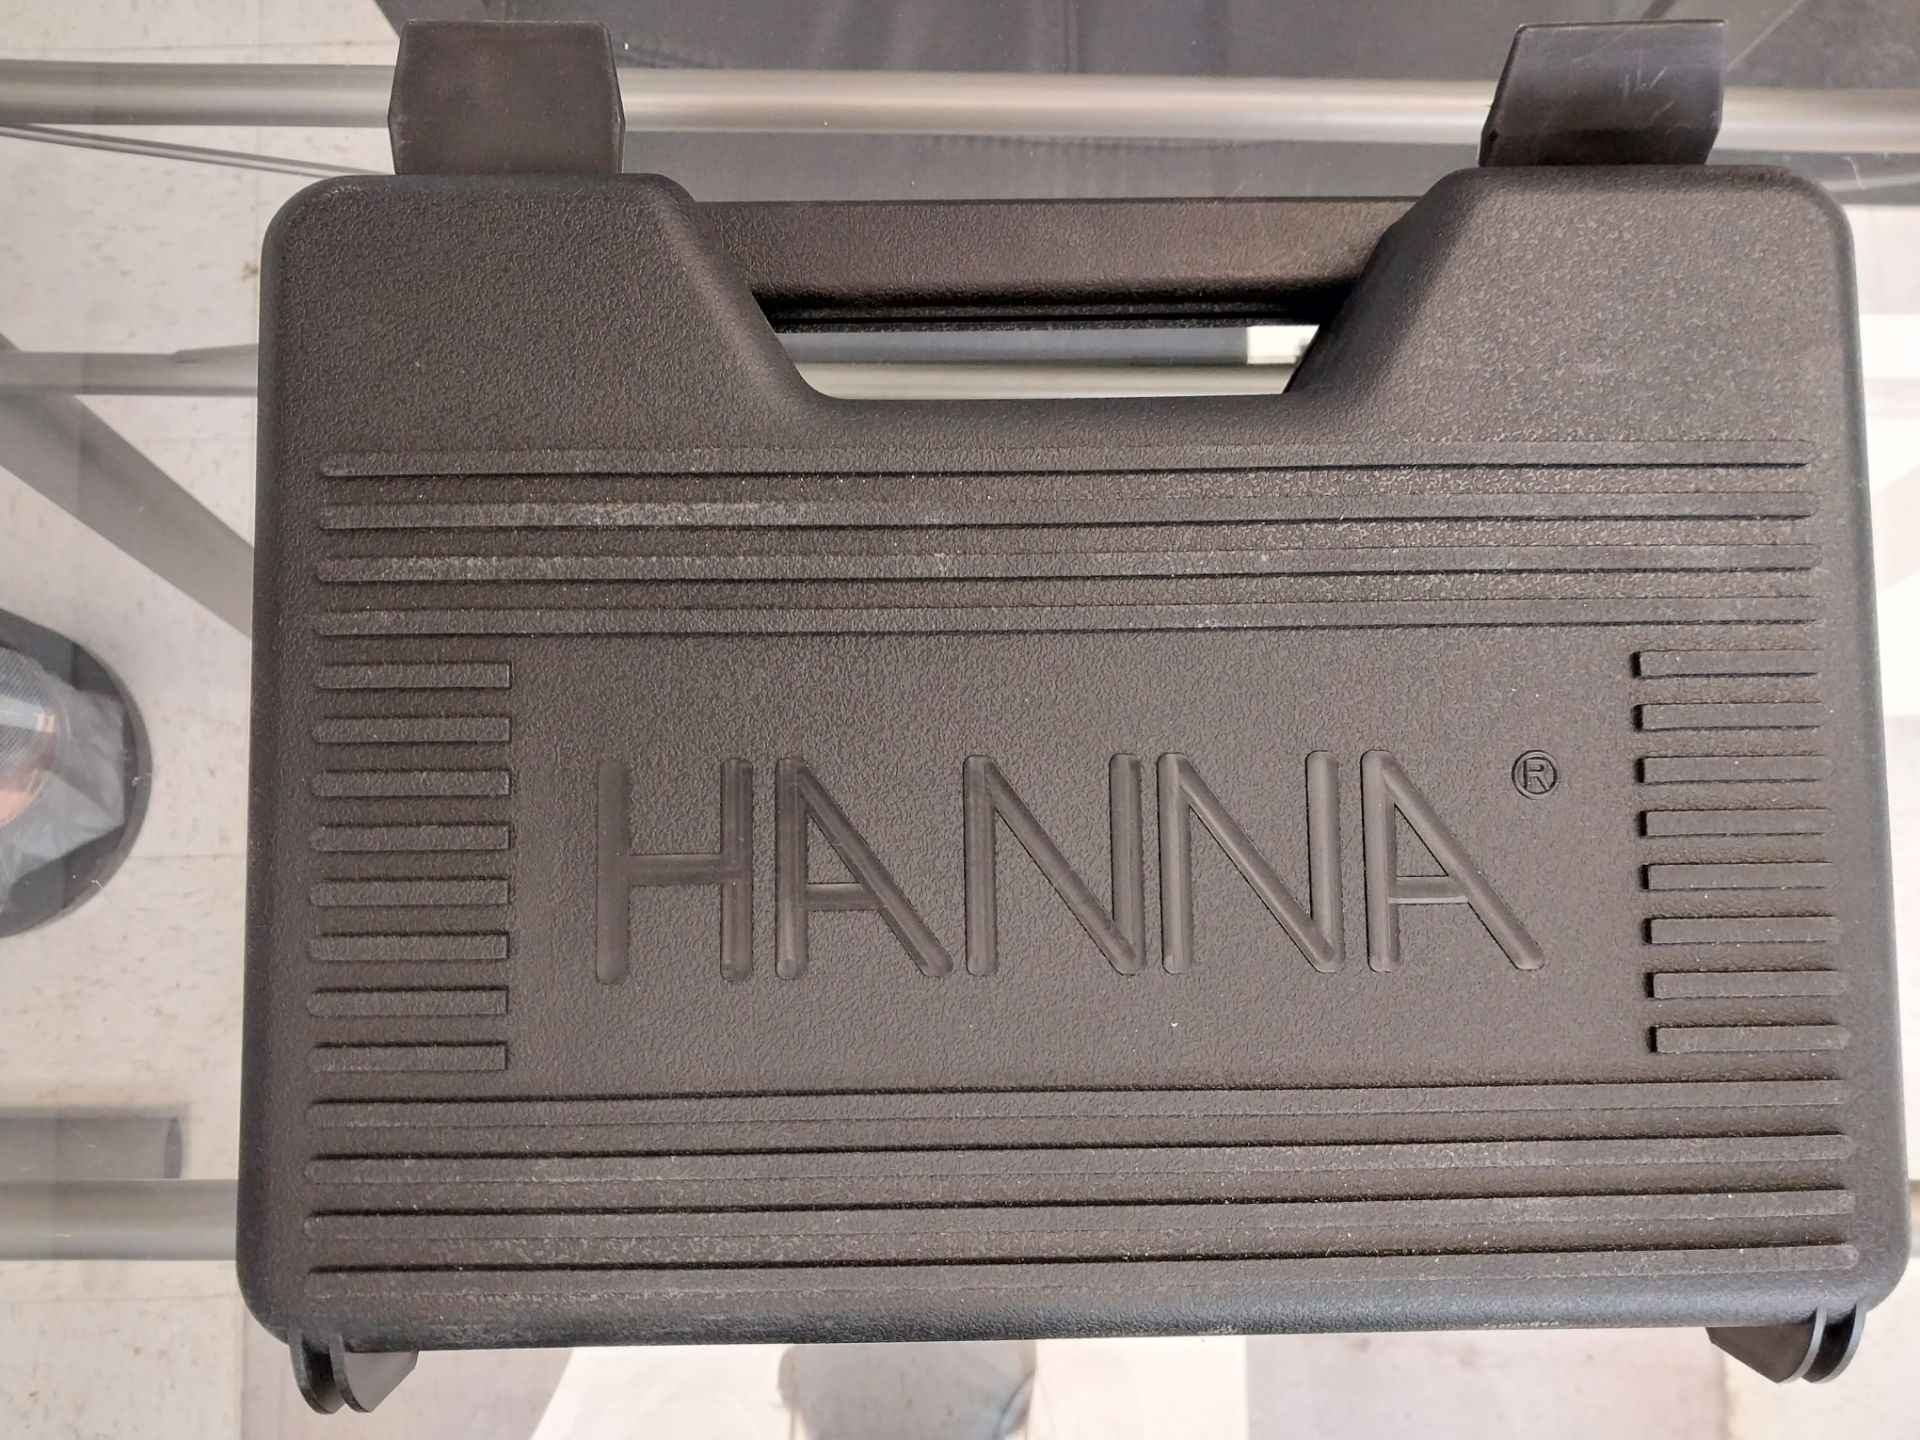 (Located in Denver, CO) Hanna Meter - New Model HI9813-6 - Image 2 of 3